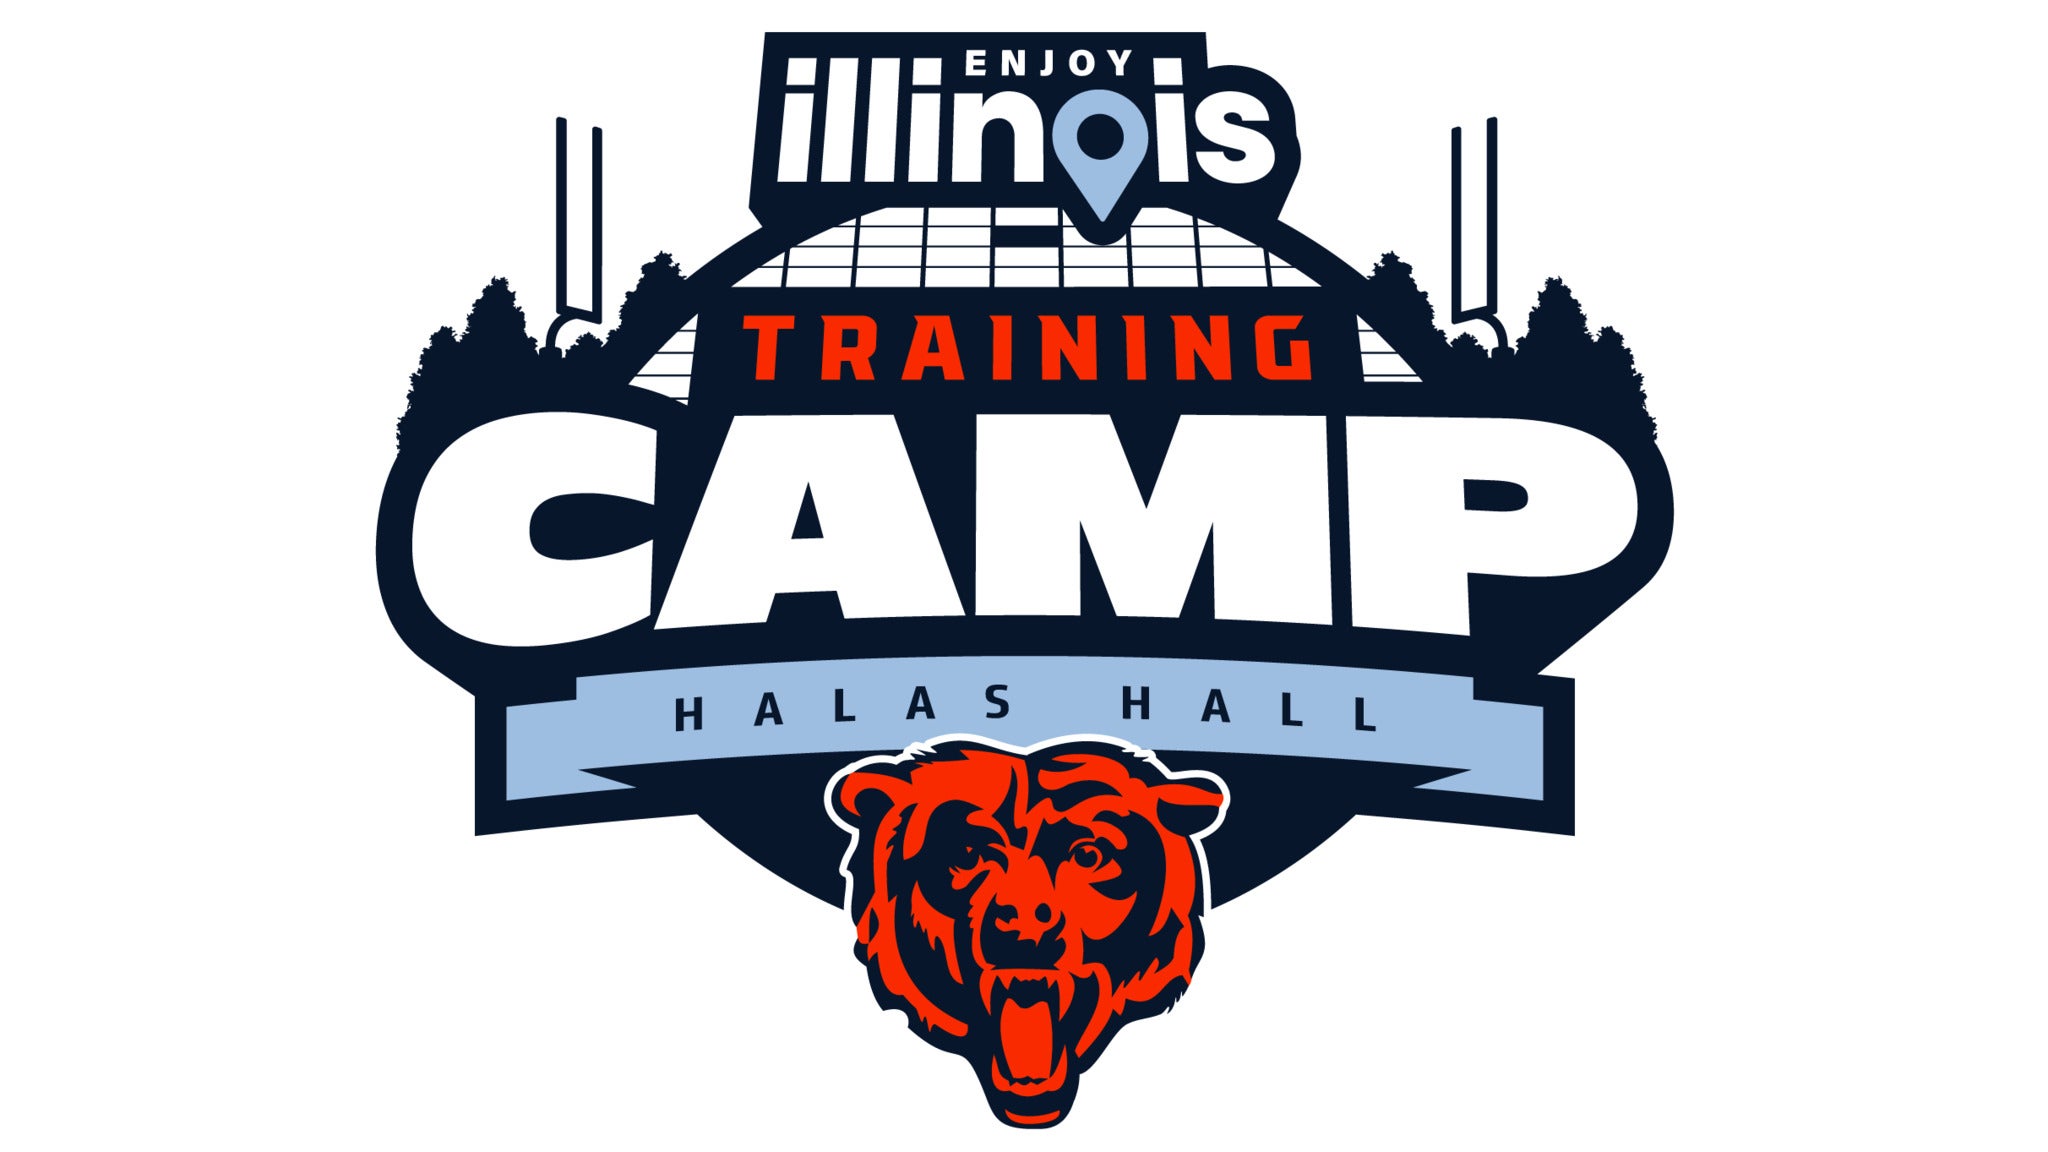 Chicago Bears Training Camp